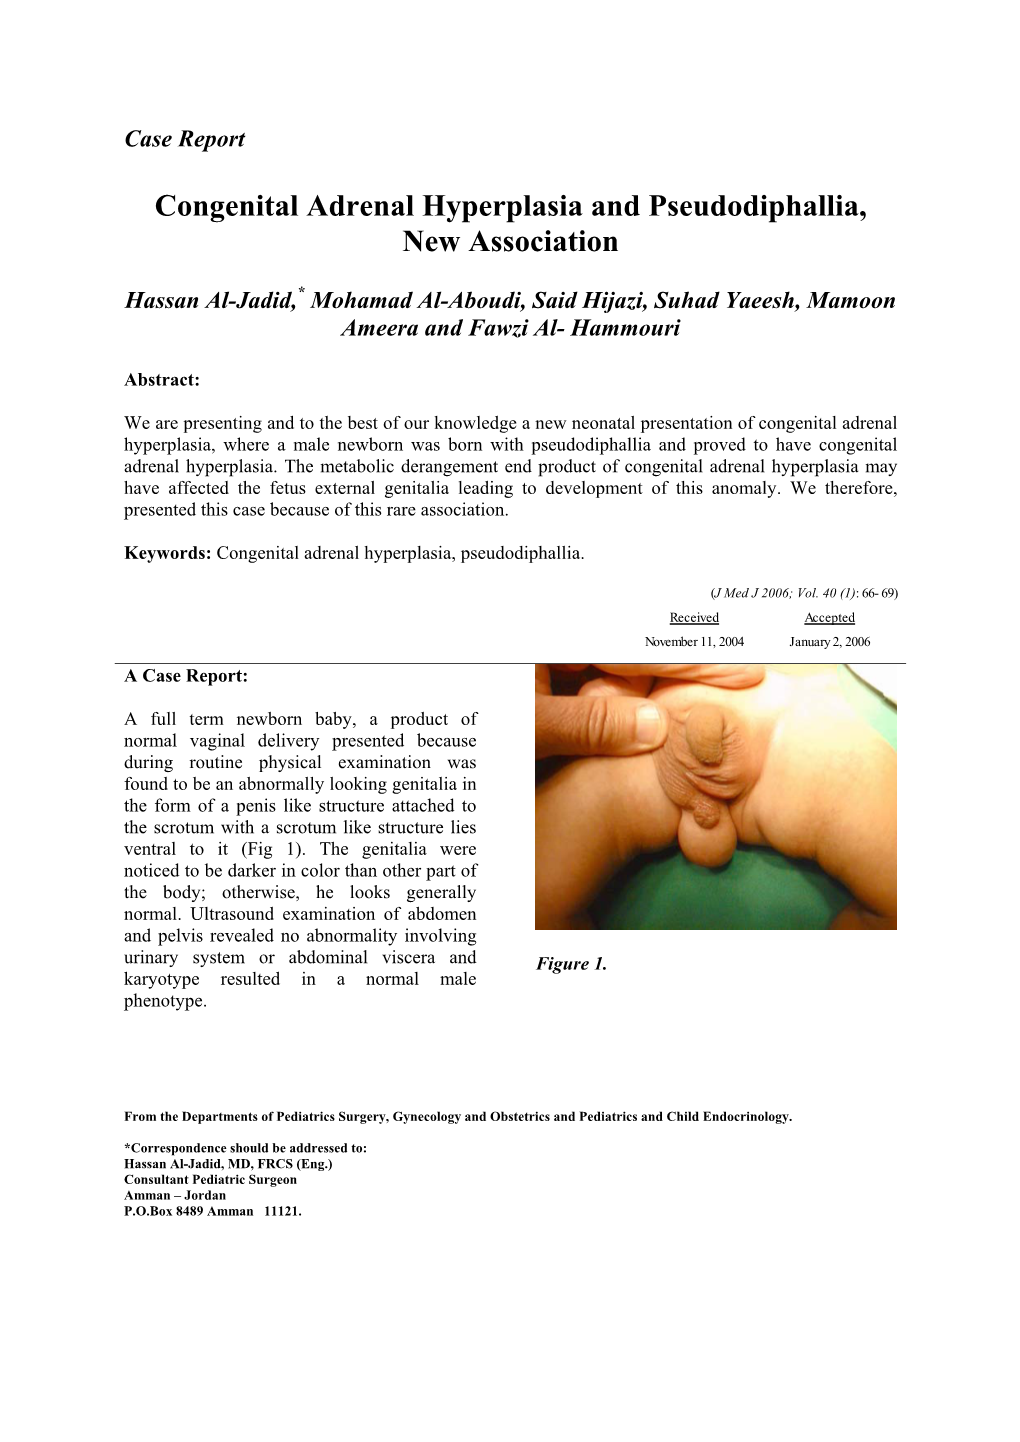 Congenital Adrenal Hyperplasia and Pseudodiphallia, New Association